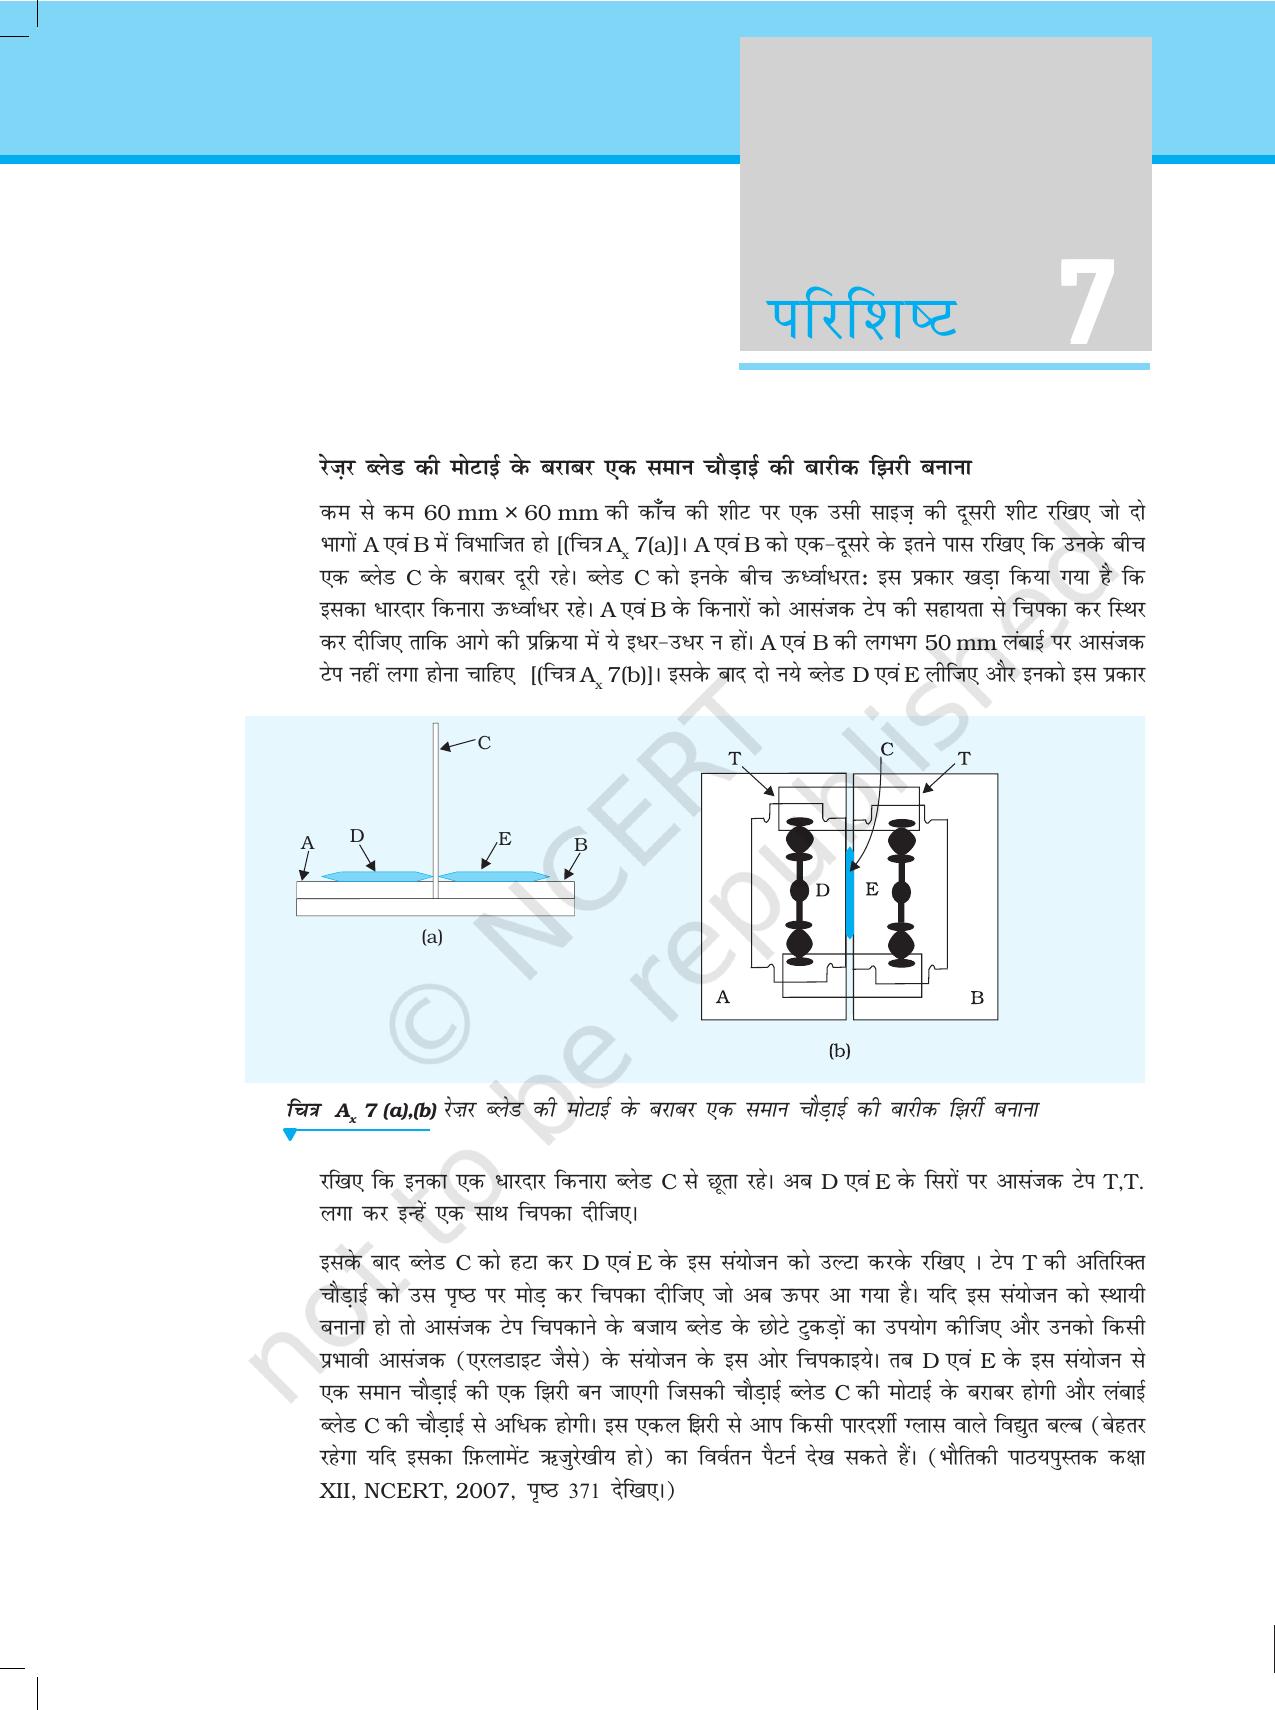 NCERT Laboratory Manuals for Class XII भौतिकी - परिशिष्ट - Page 11